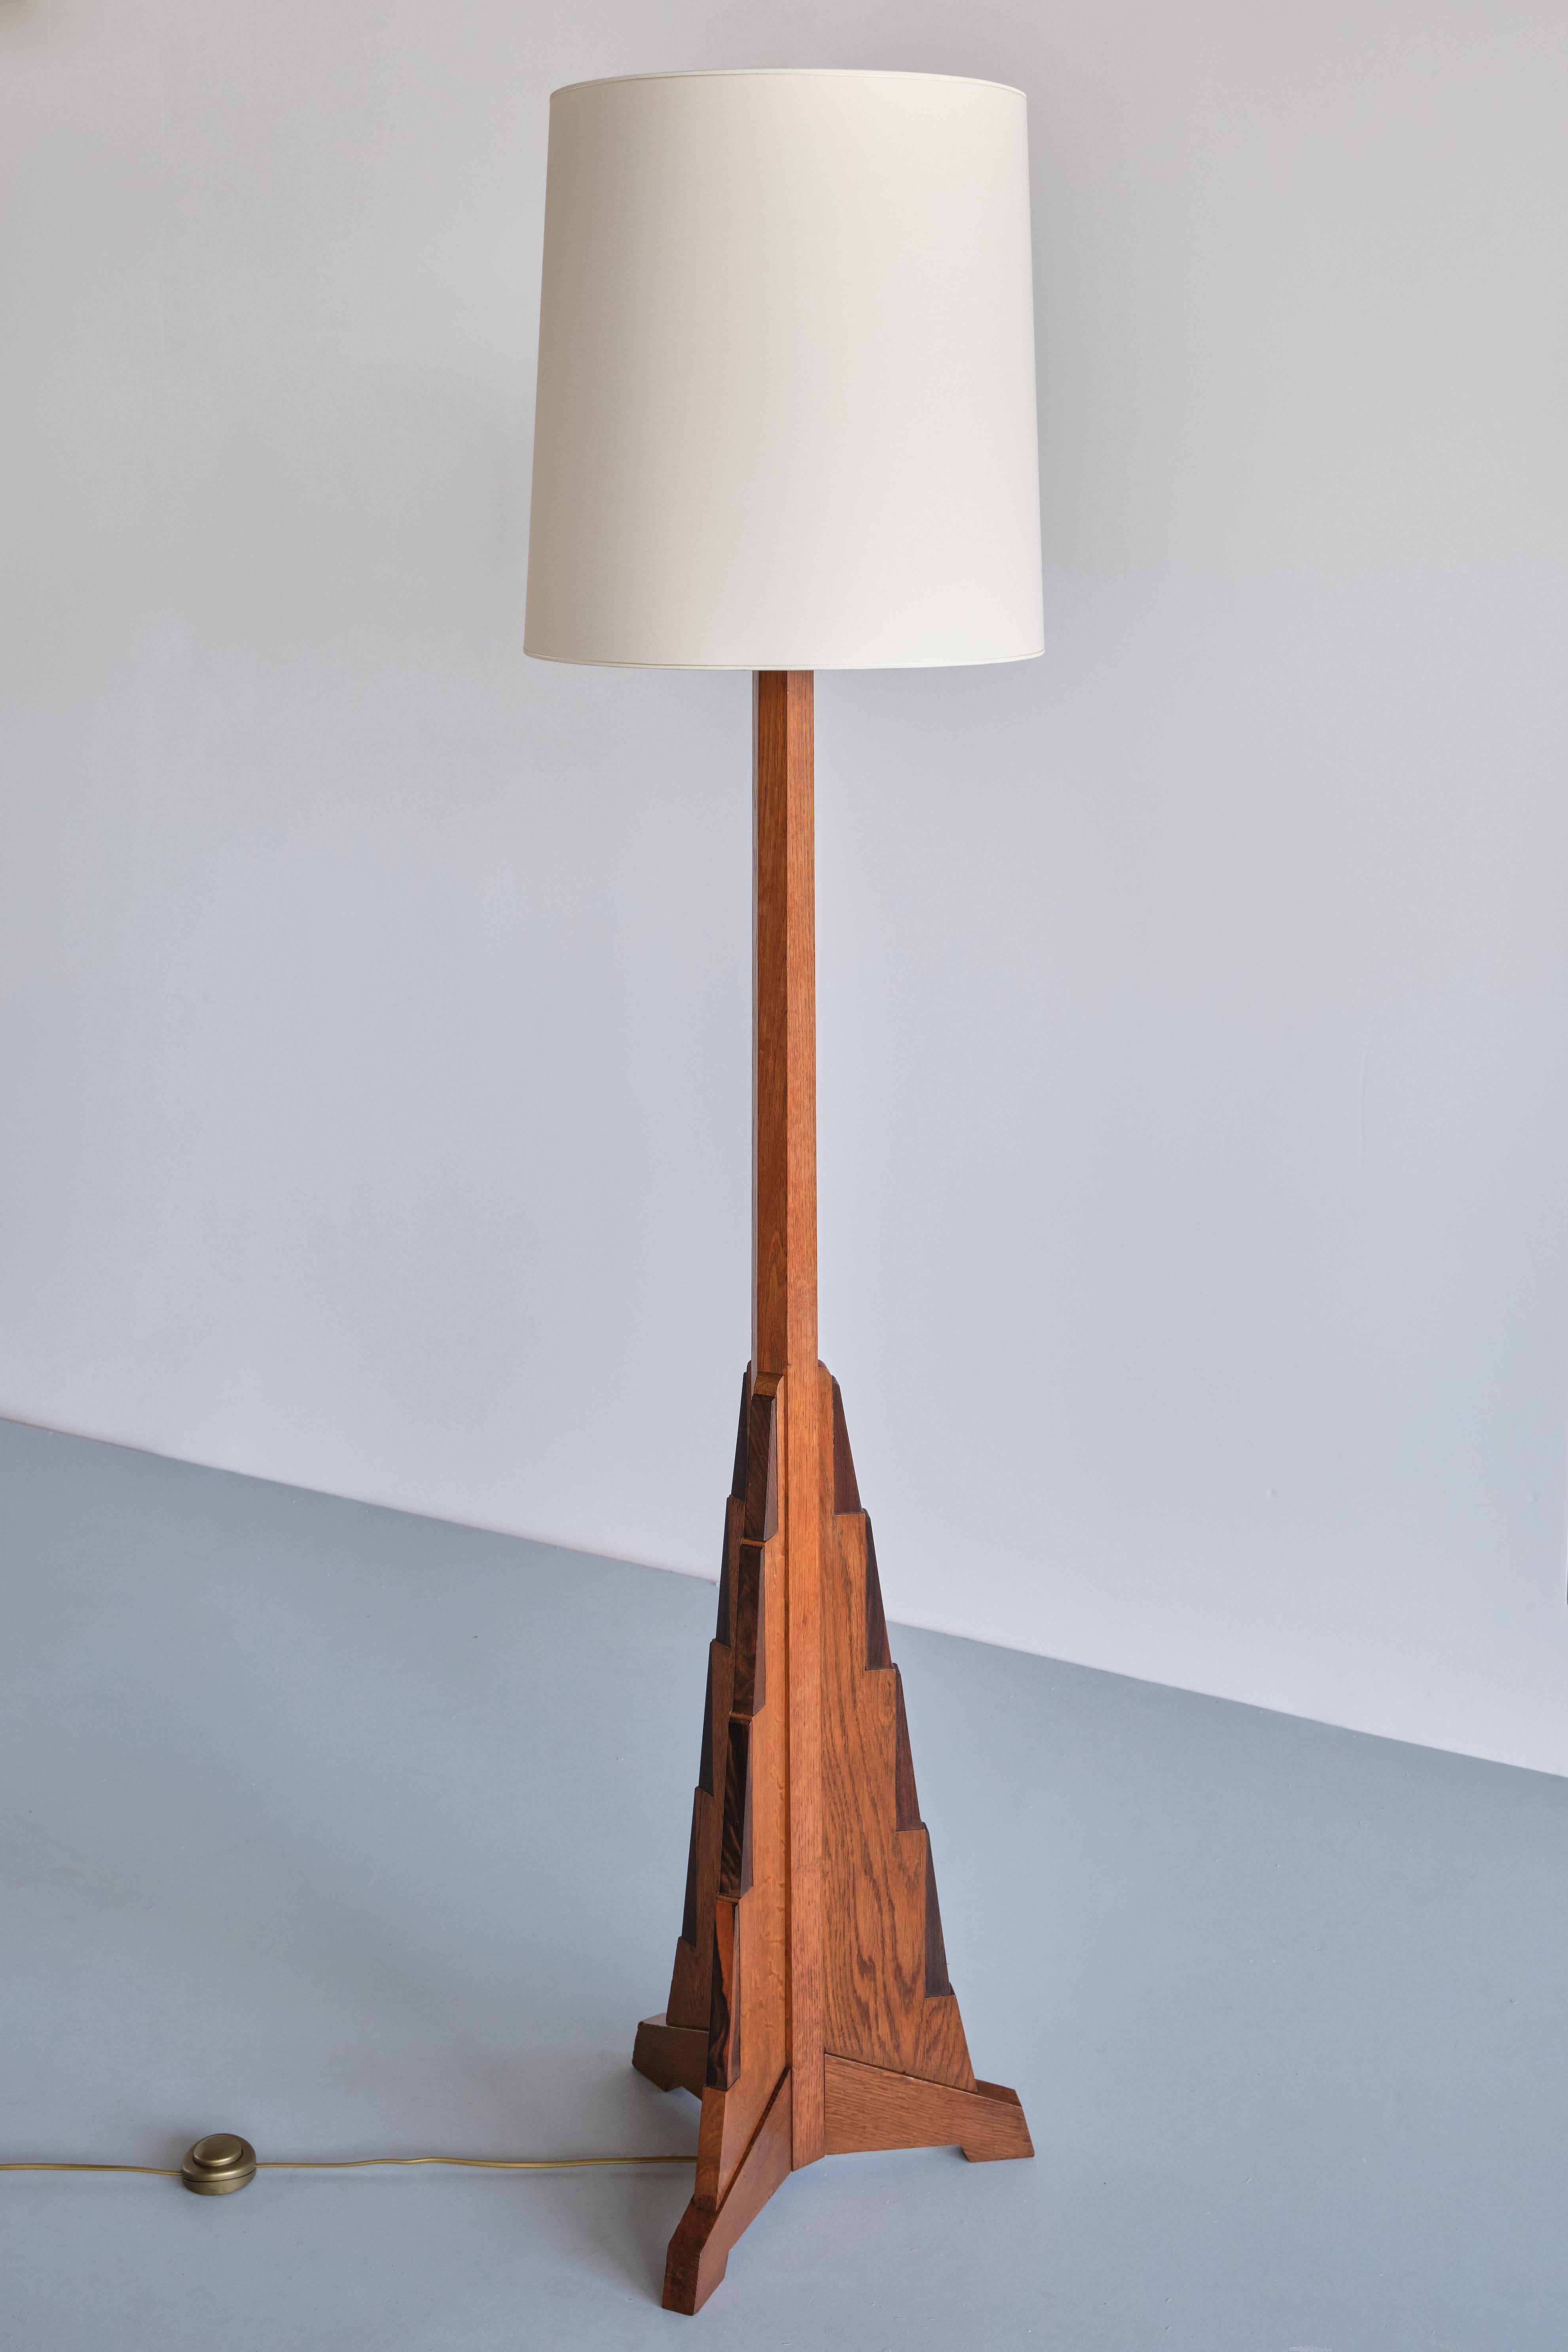 Cor Alons Art Deco Floor Lamp in Oak and Macassar Ebony, Netherlands, 1930s For Sale 1